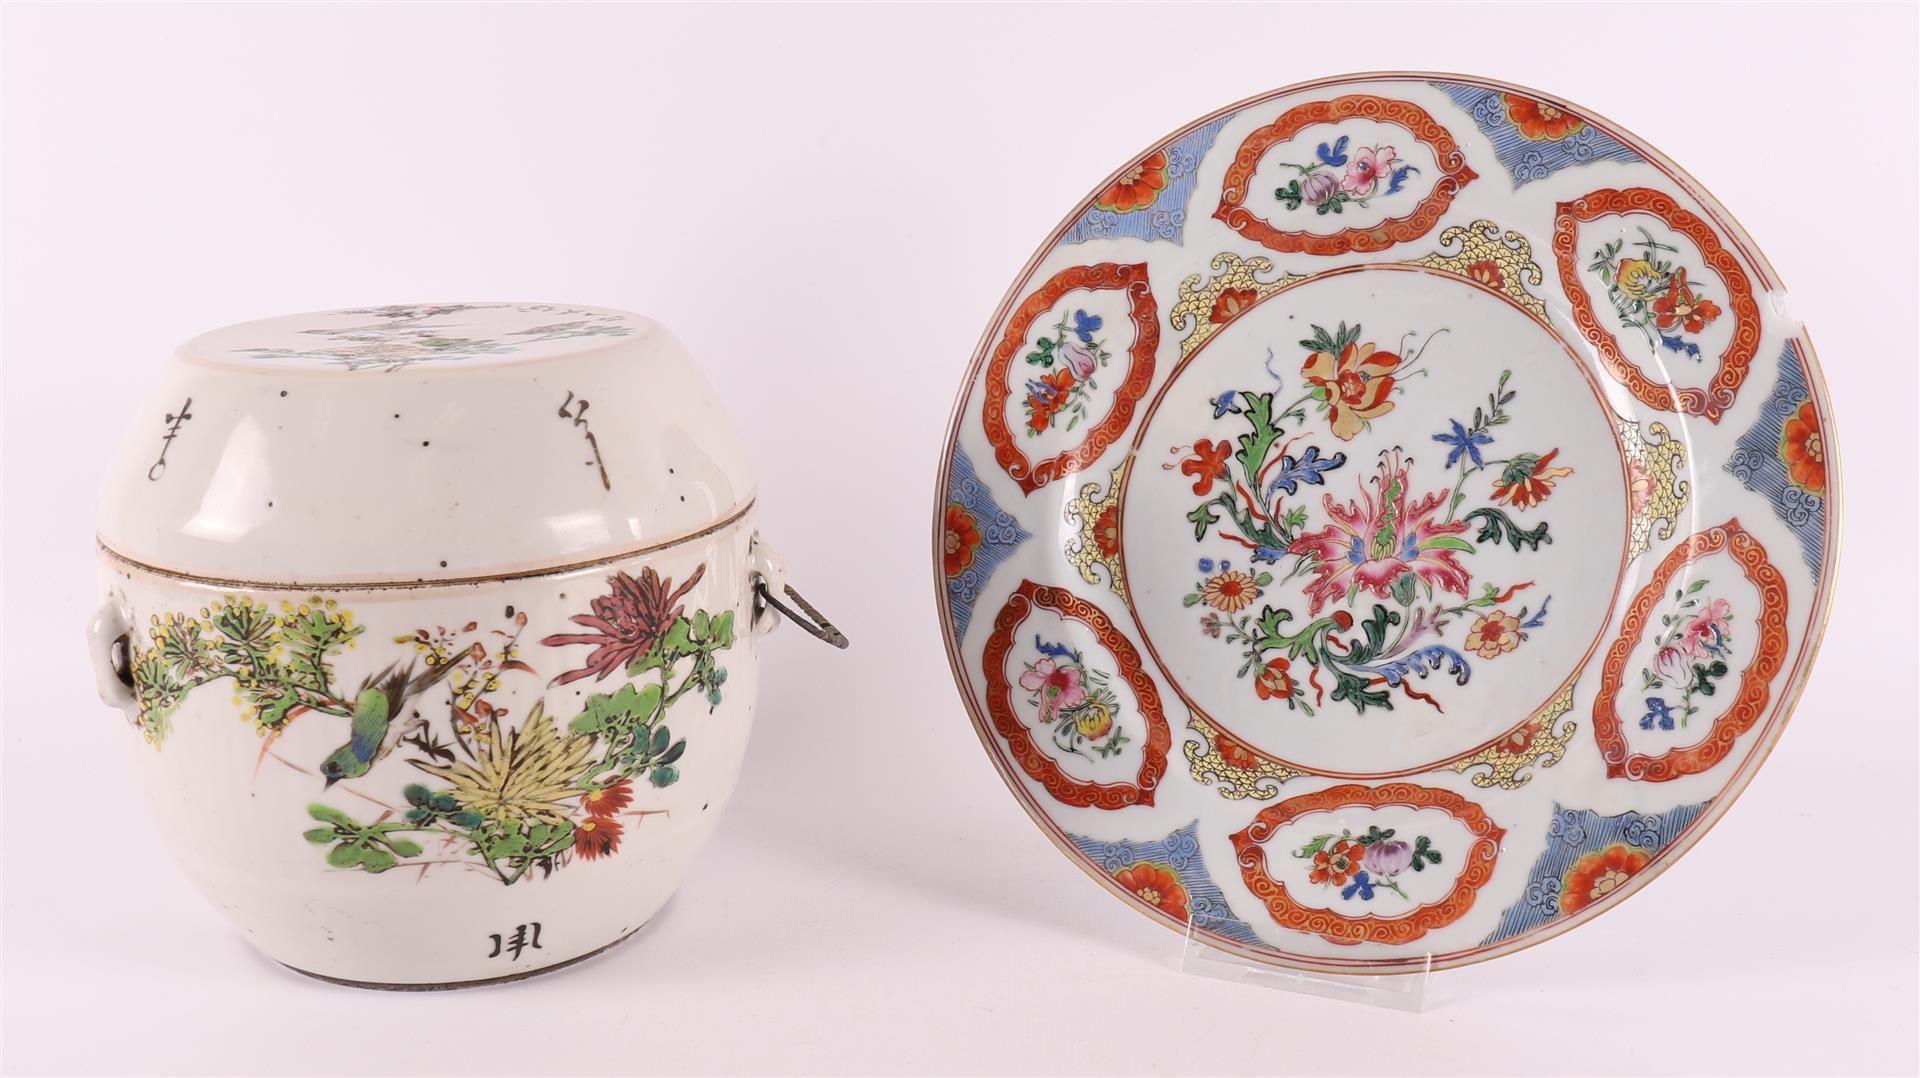 A porcelain lidded jar, China, 20th century.